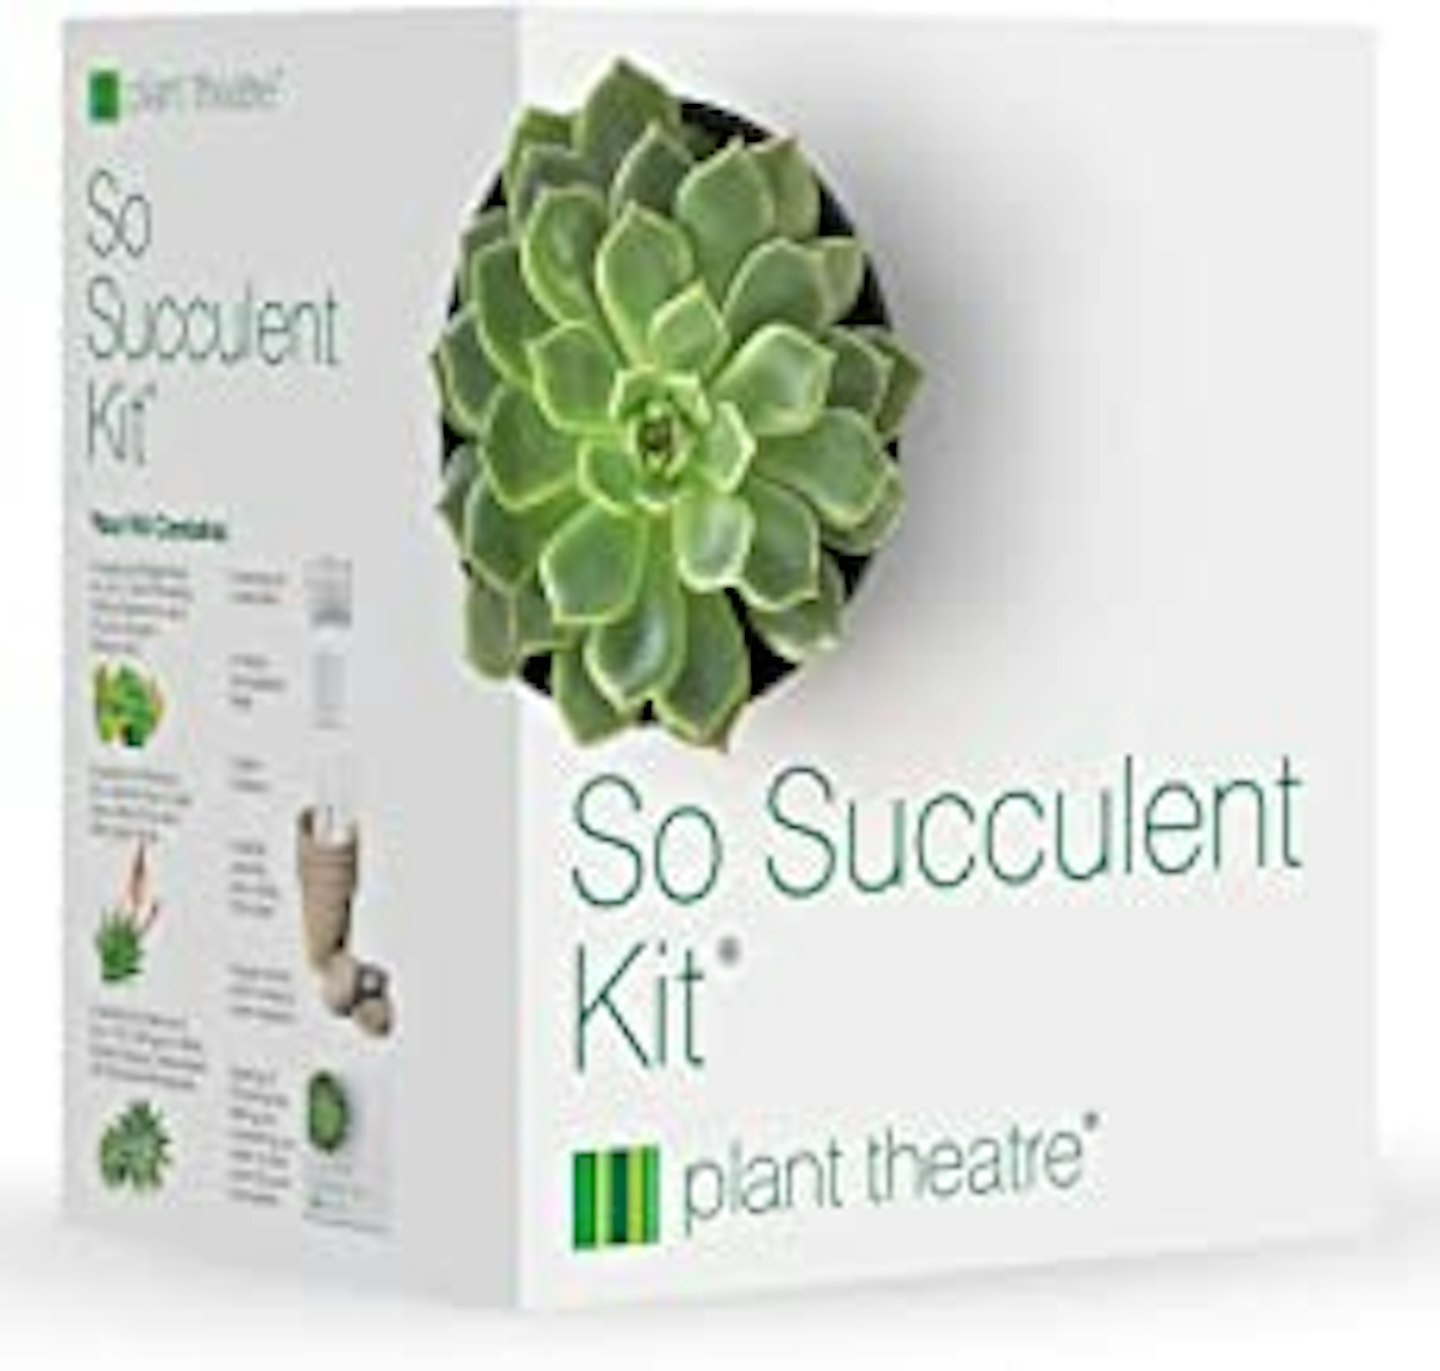 So Succulent Kit